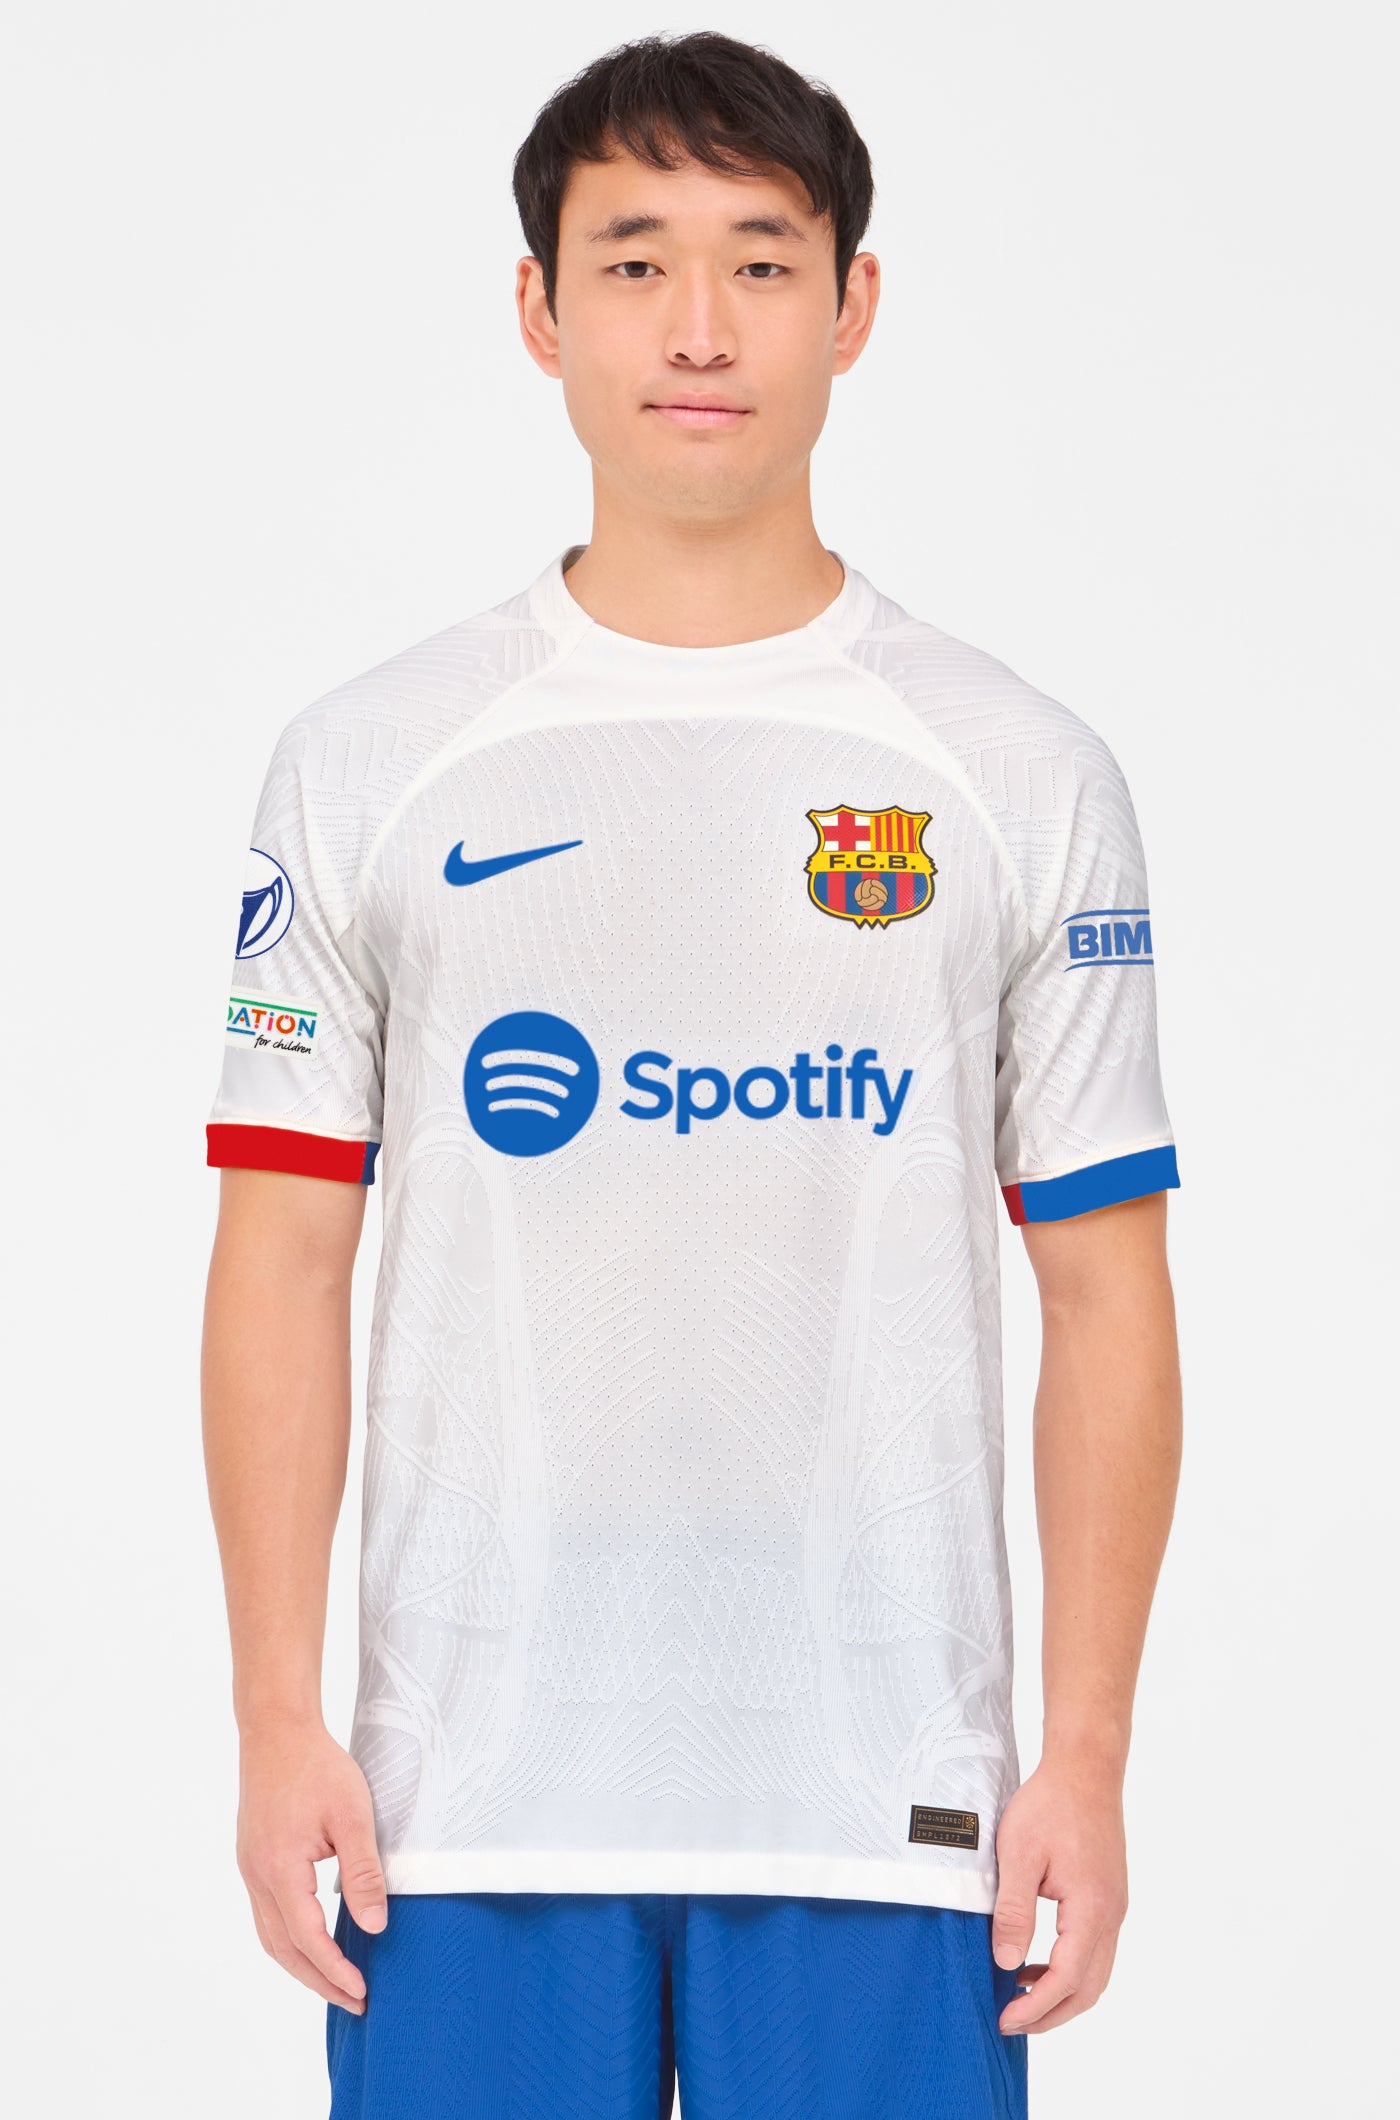 UWCL Camiseta segunda equipación FC Barcelona 23/24 Edición Jugador - BRONZE